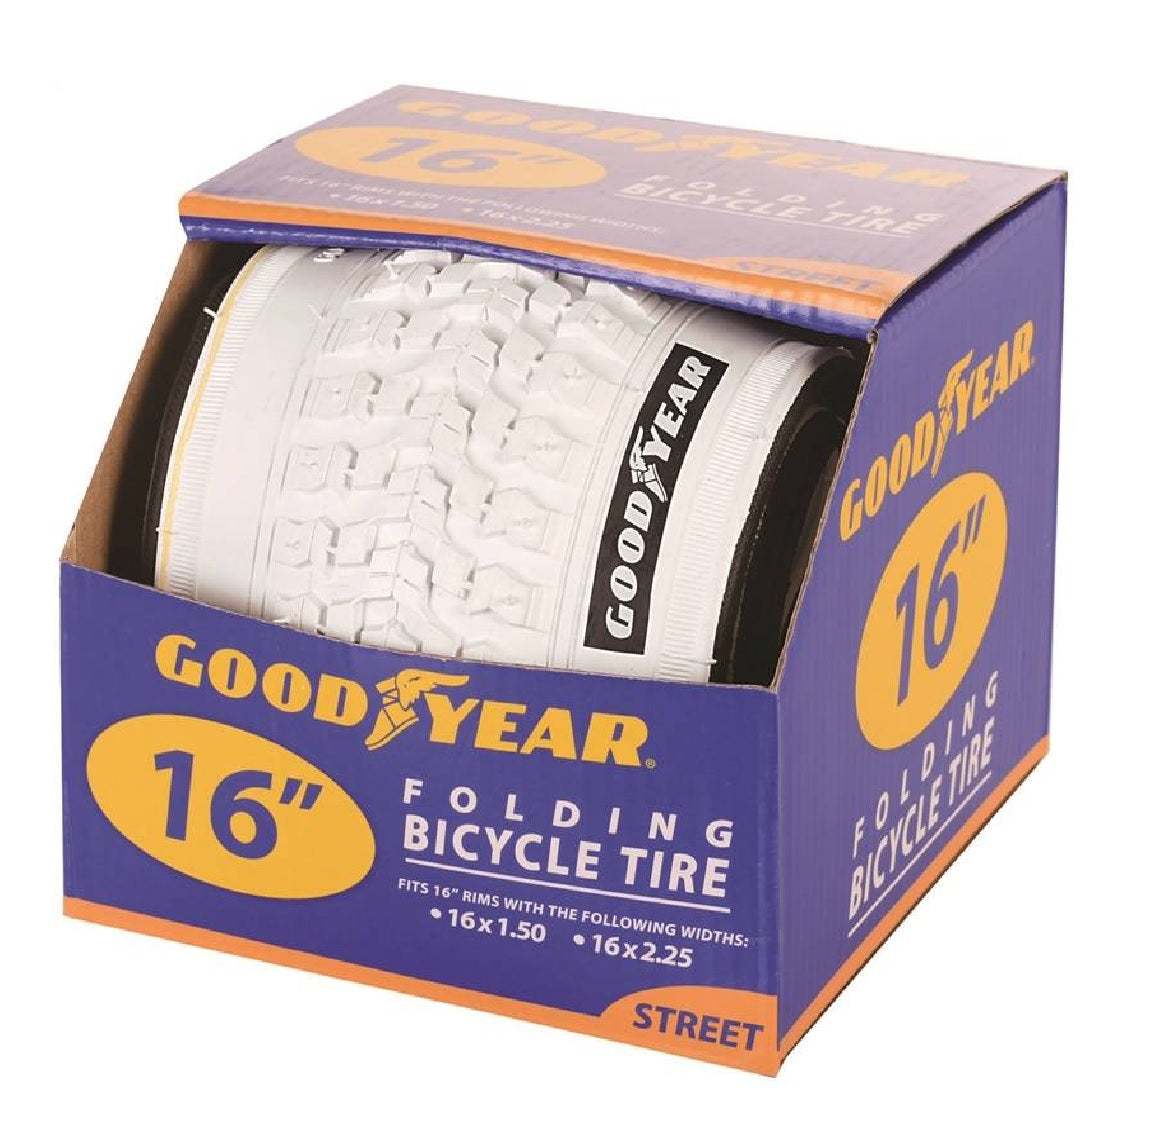 Goodyear 91108 16" Folding Bike Tire, White